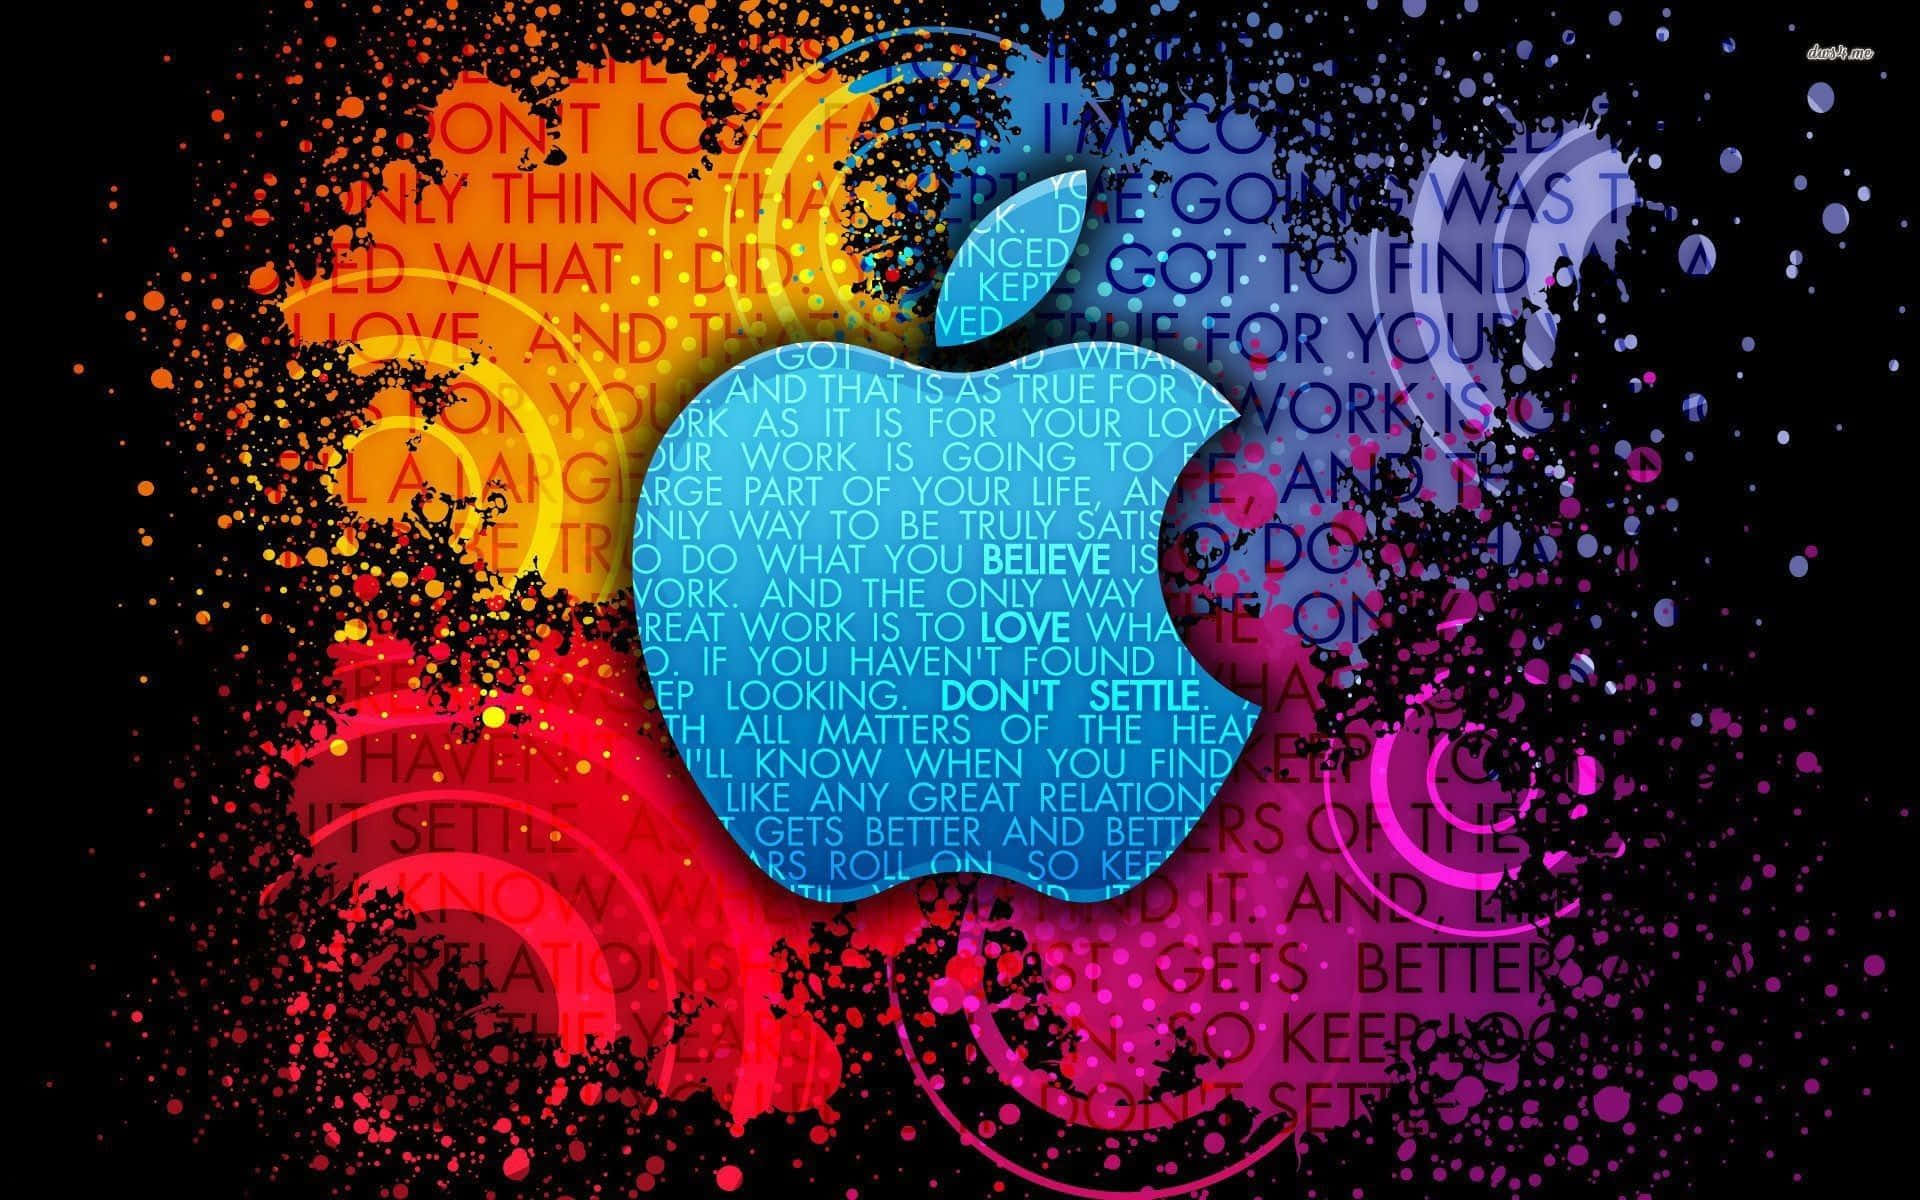 apple wallpaper hd for laptop